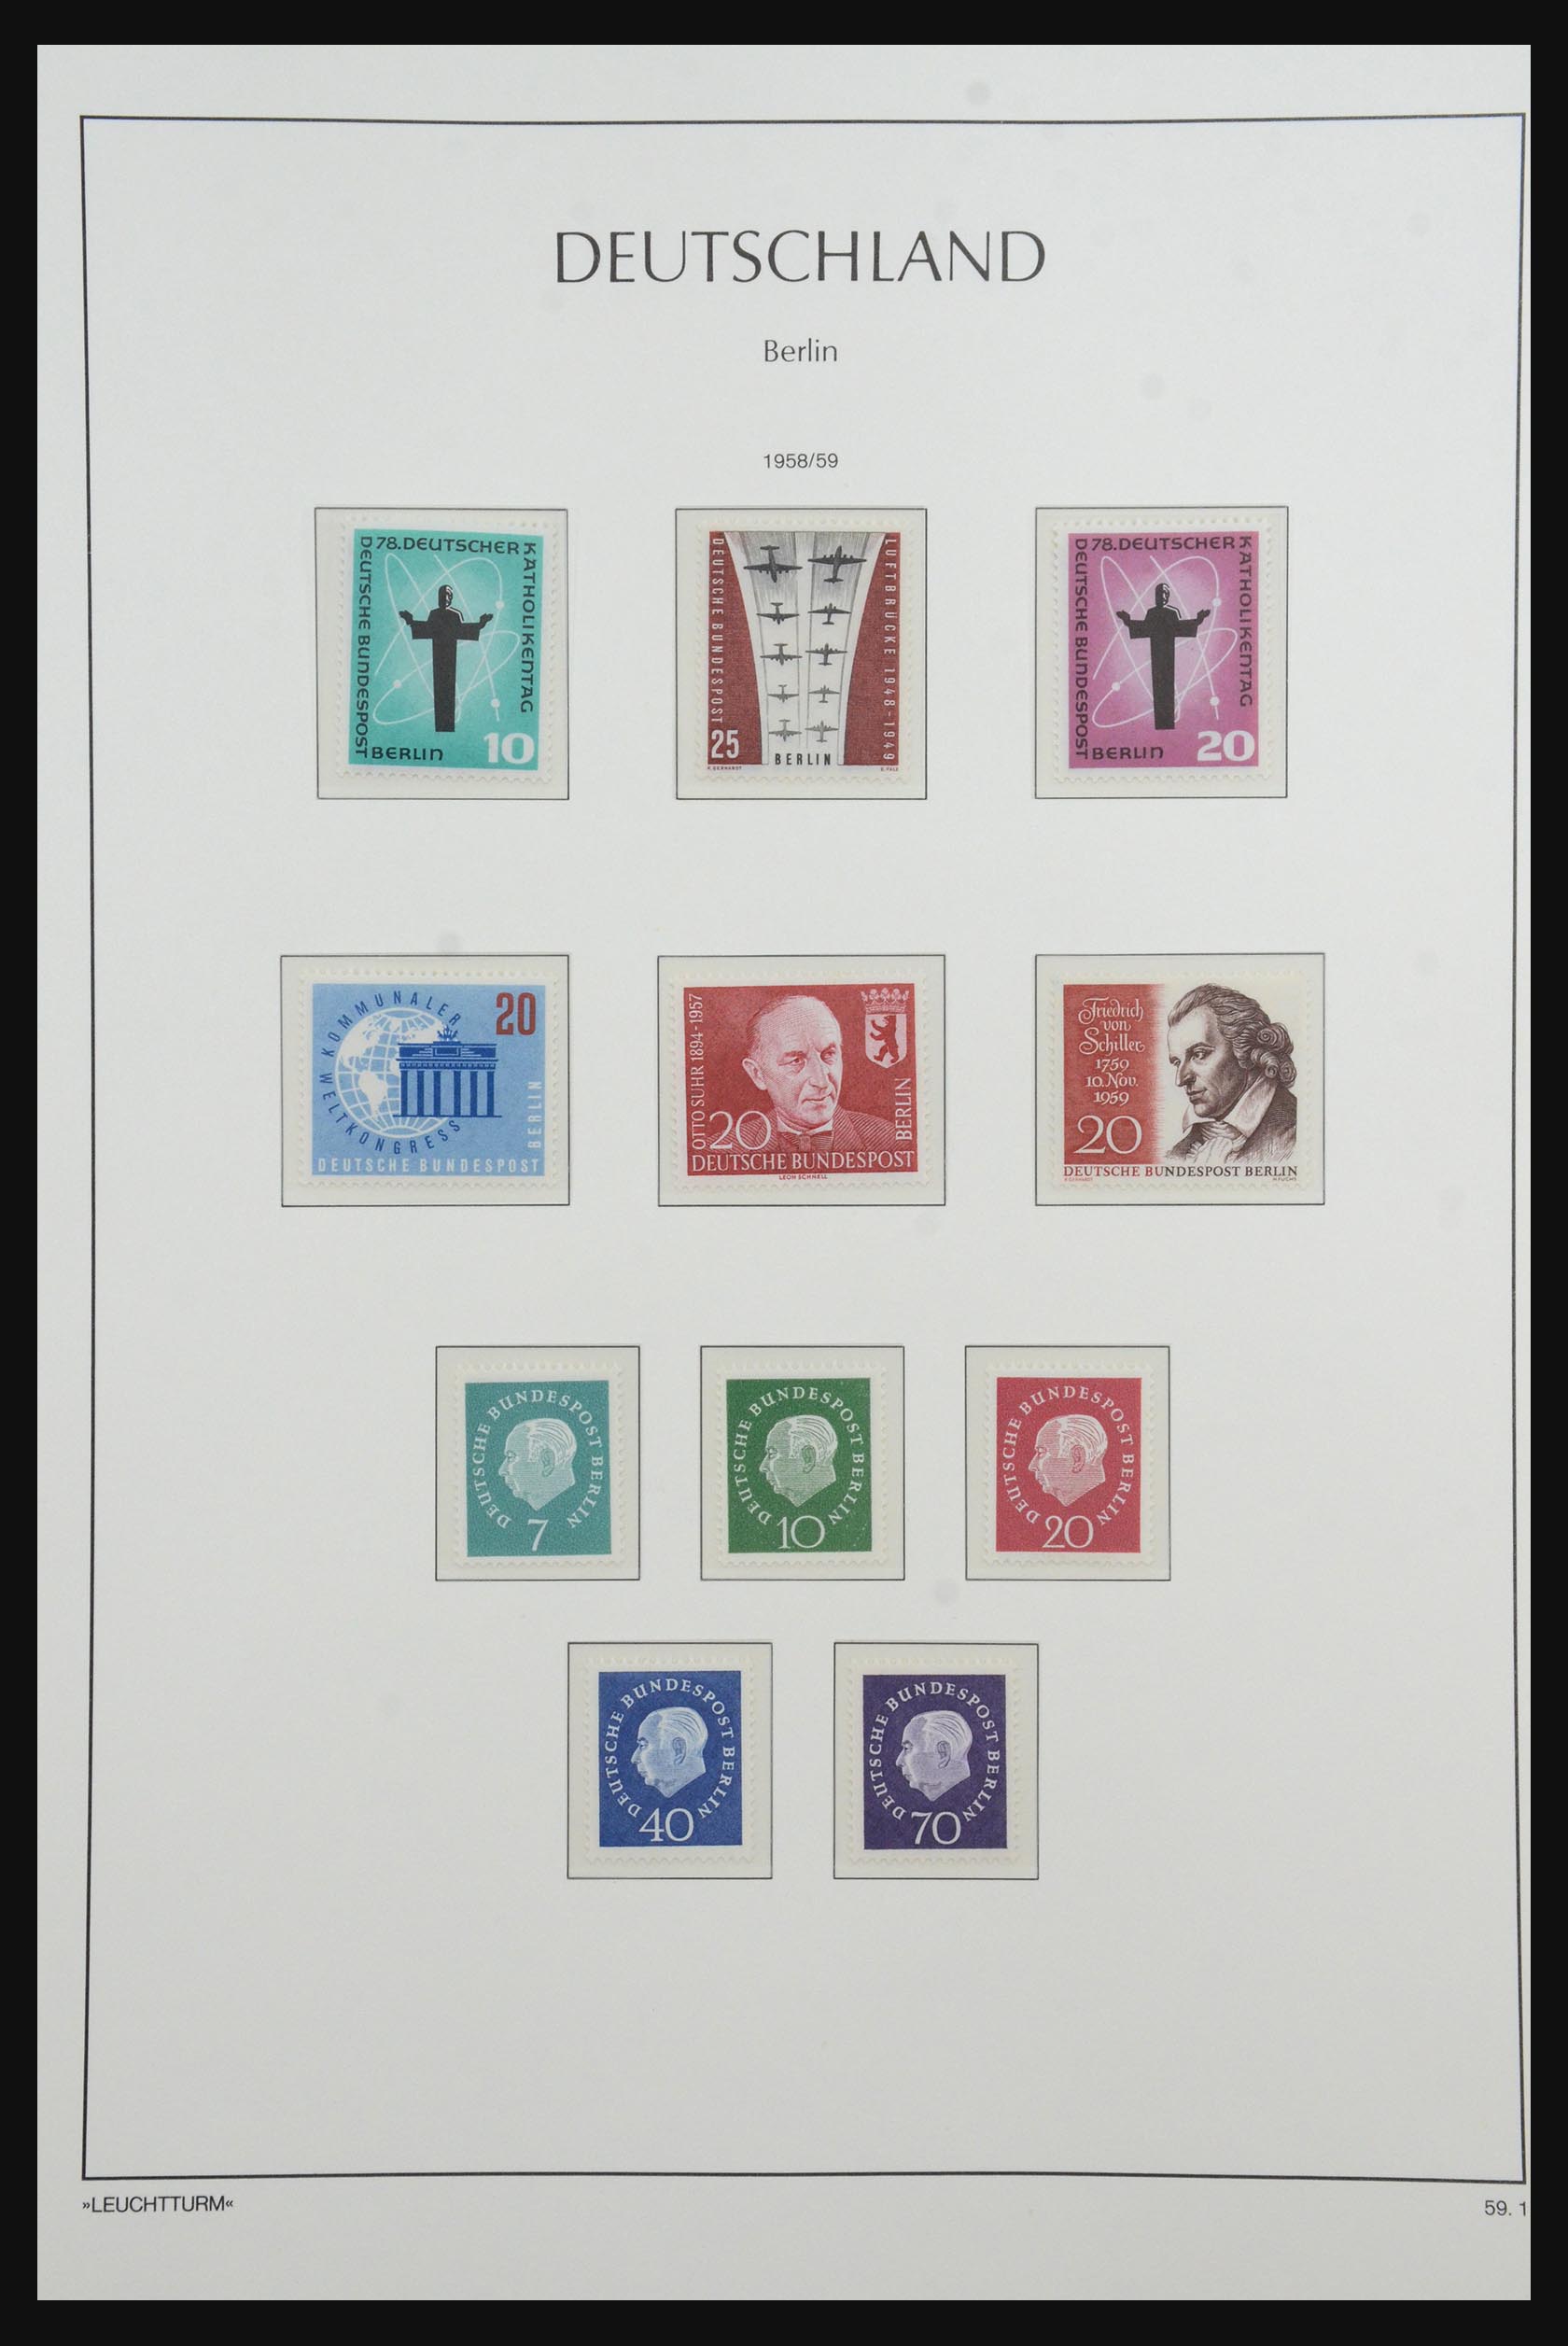 31601 015 - 31601 Bundespost, Berlin and Saar 1948-2008.